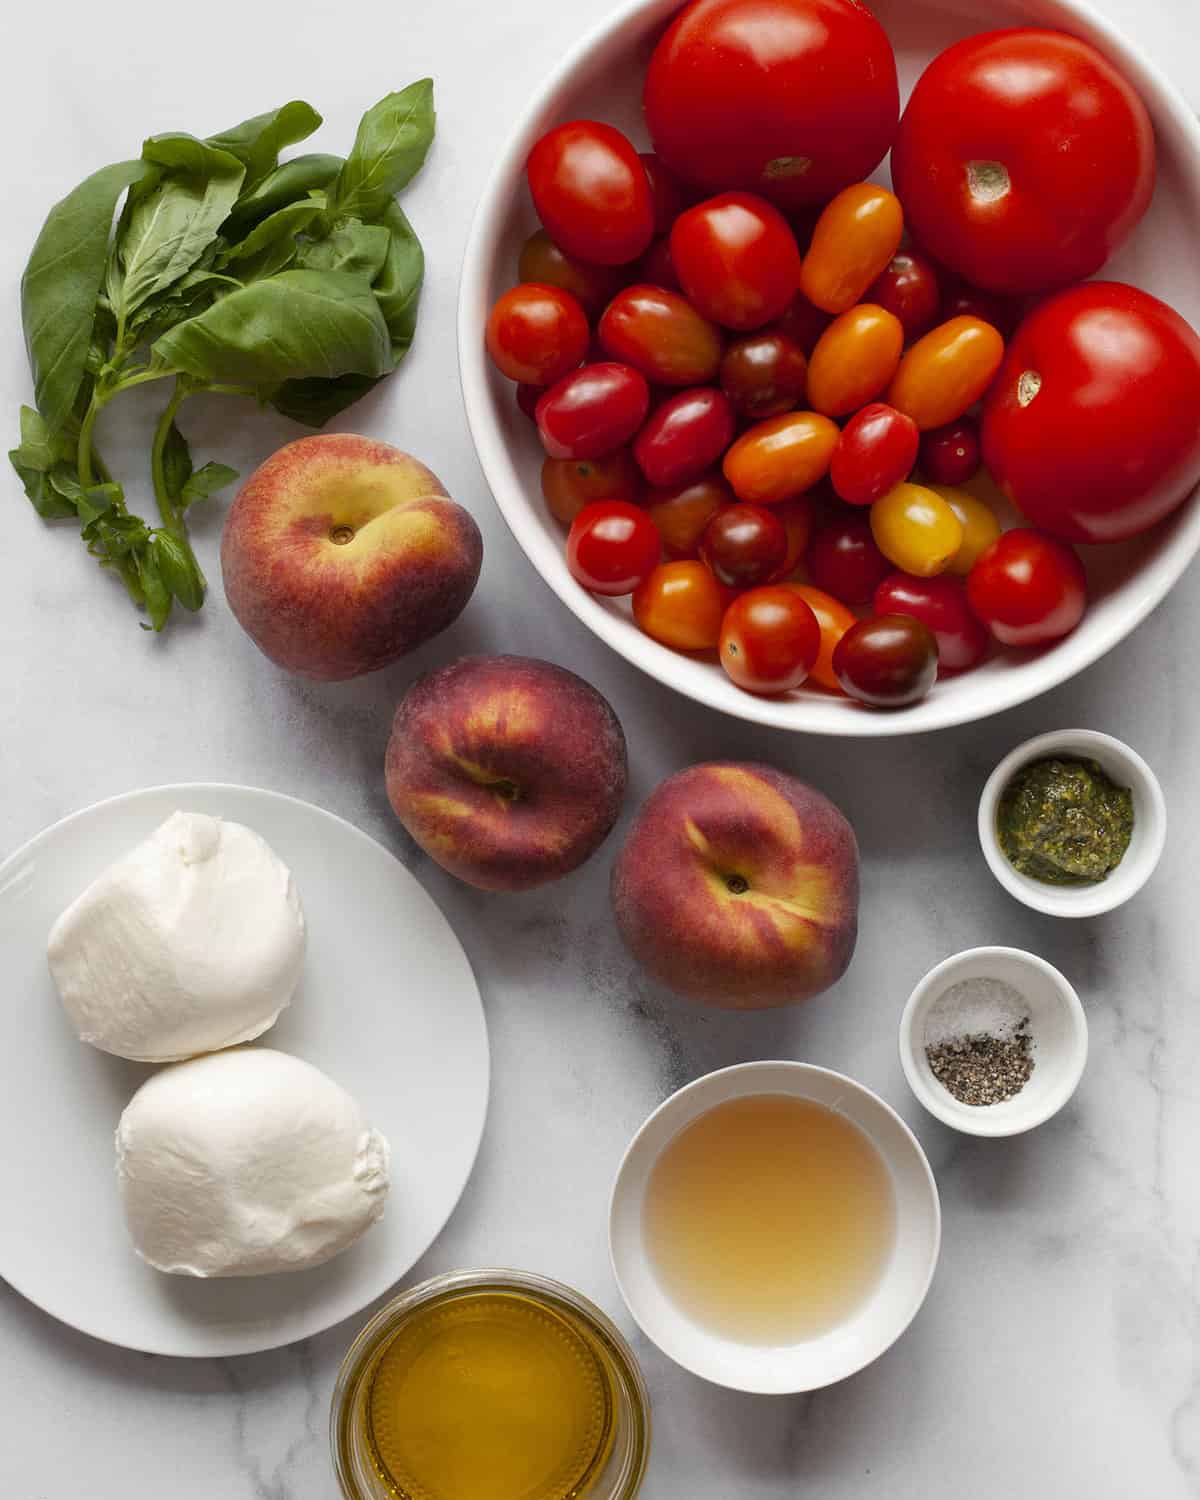 Ingredients including tomatoes, peaches, mozzarella, basil, olive oil, vinegar, pesto, salt and pepper.